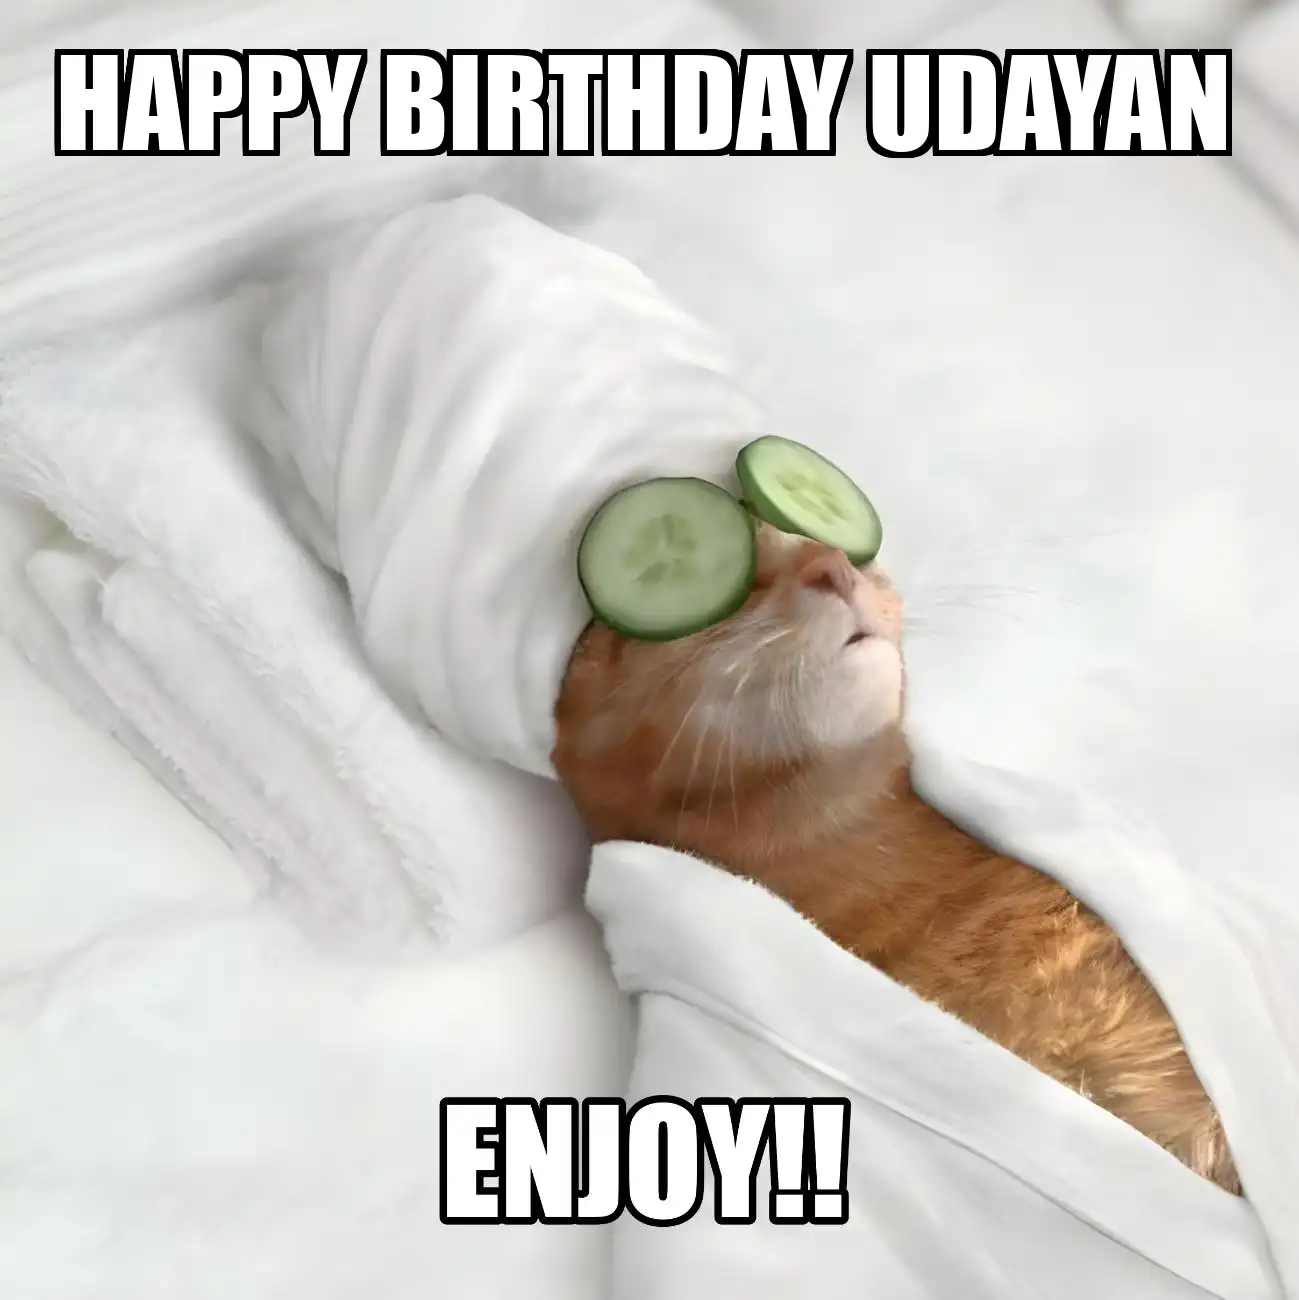 Happy Birthday Udayan Enjoy Cat Meme